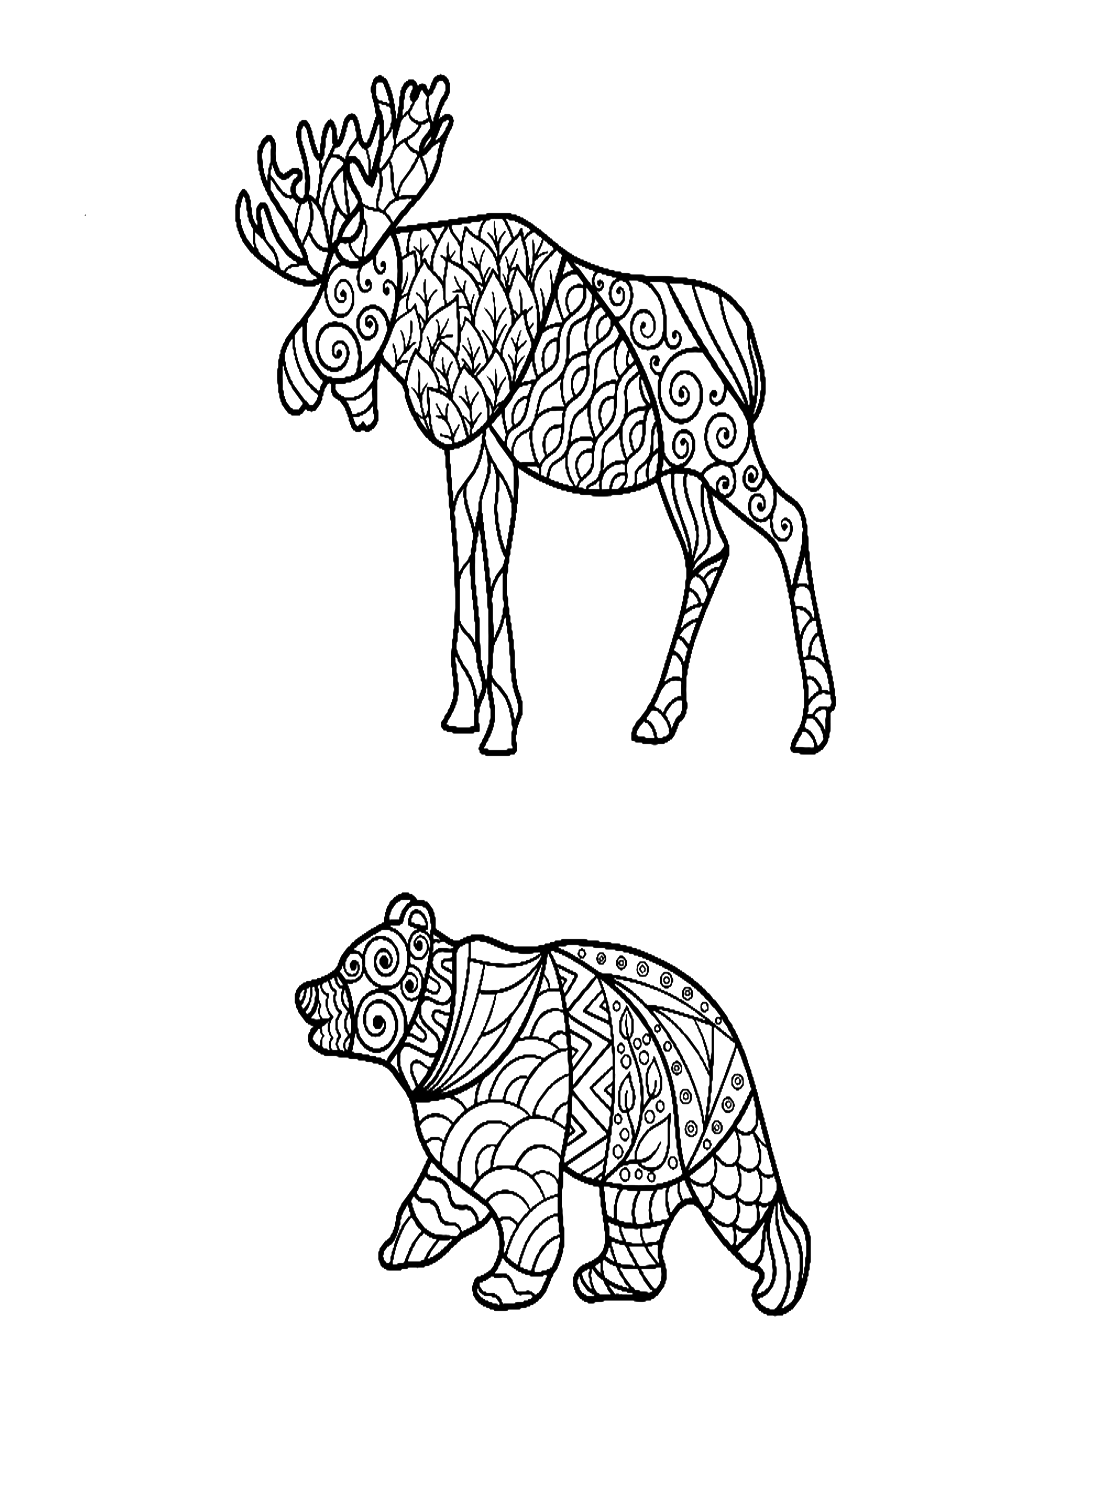 Elk And Bear In Zentangle Style from Elk